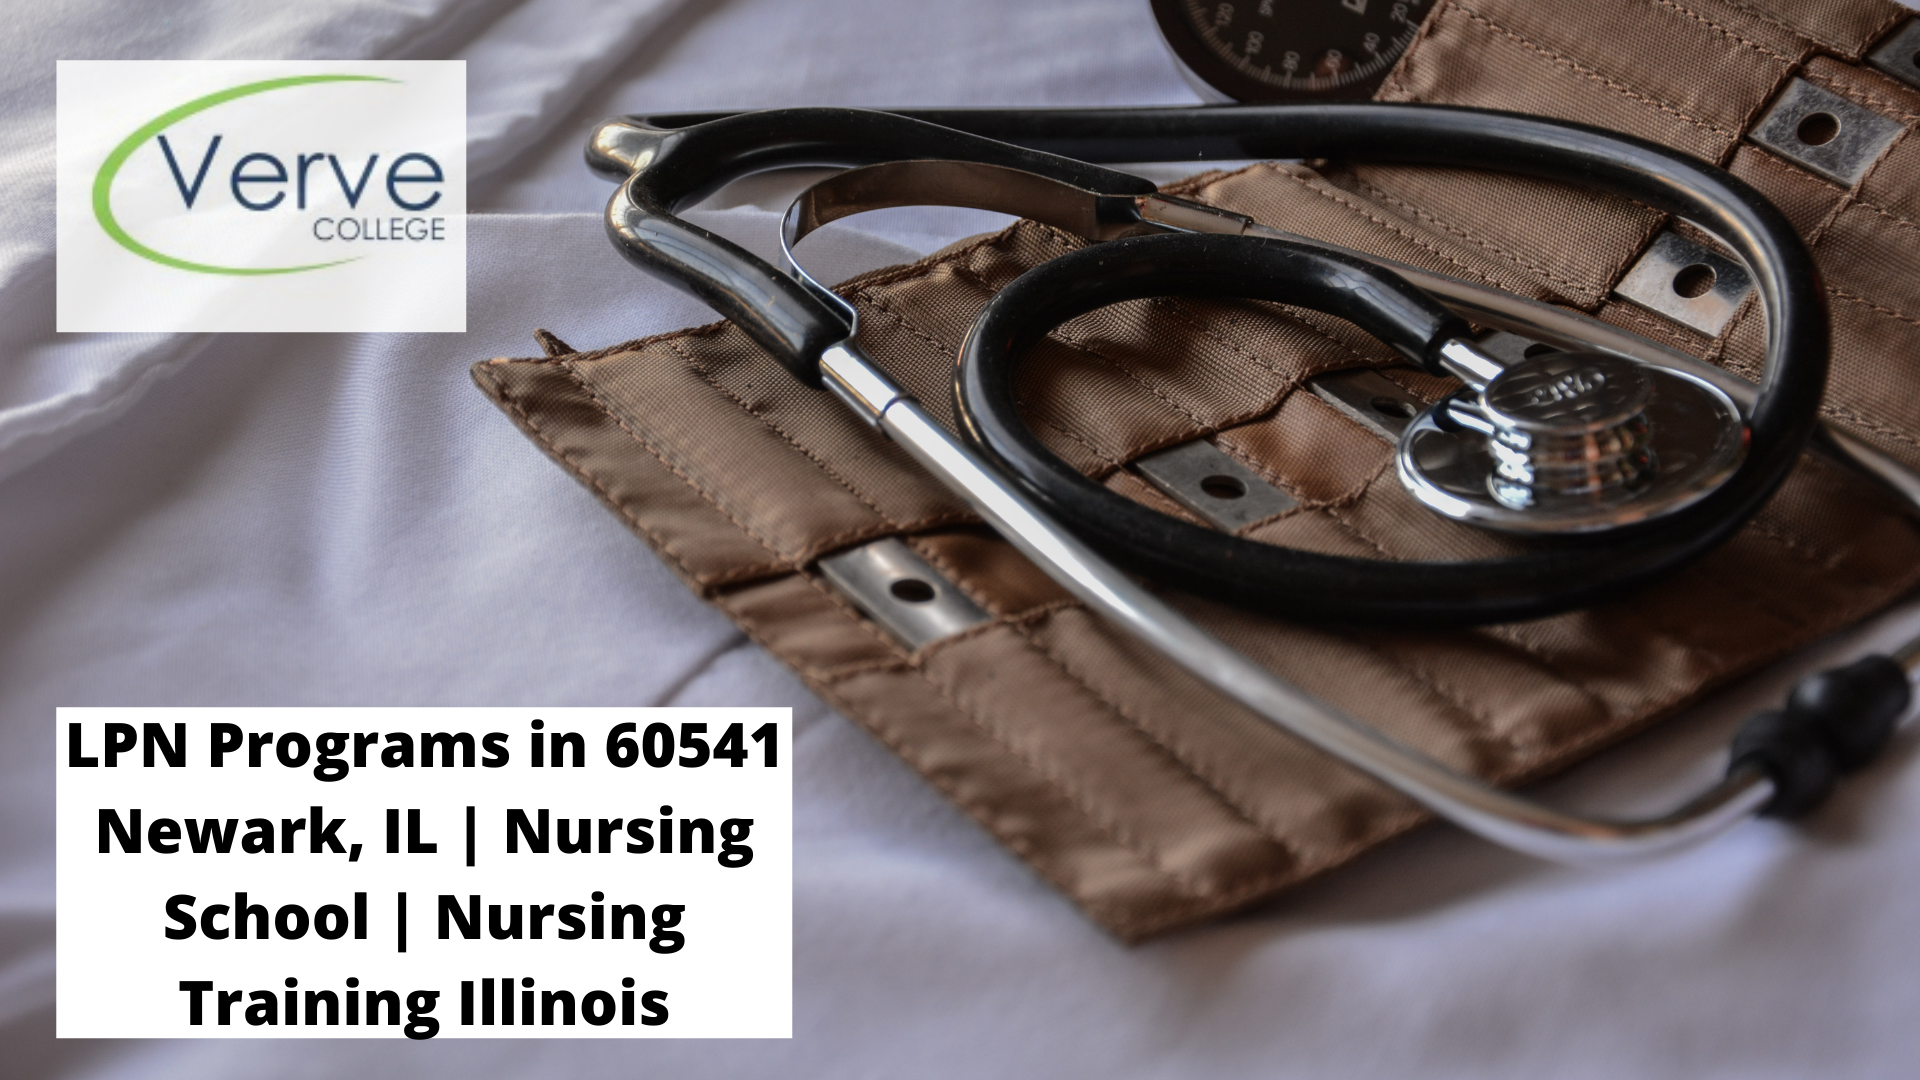 LPN Programs in 60541 Newark, IL | Nursing School | Nursing Training Illinois